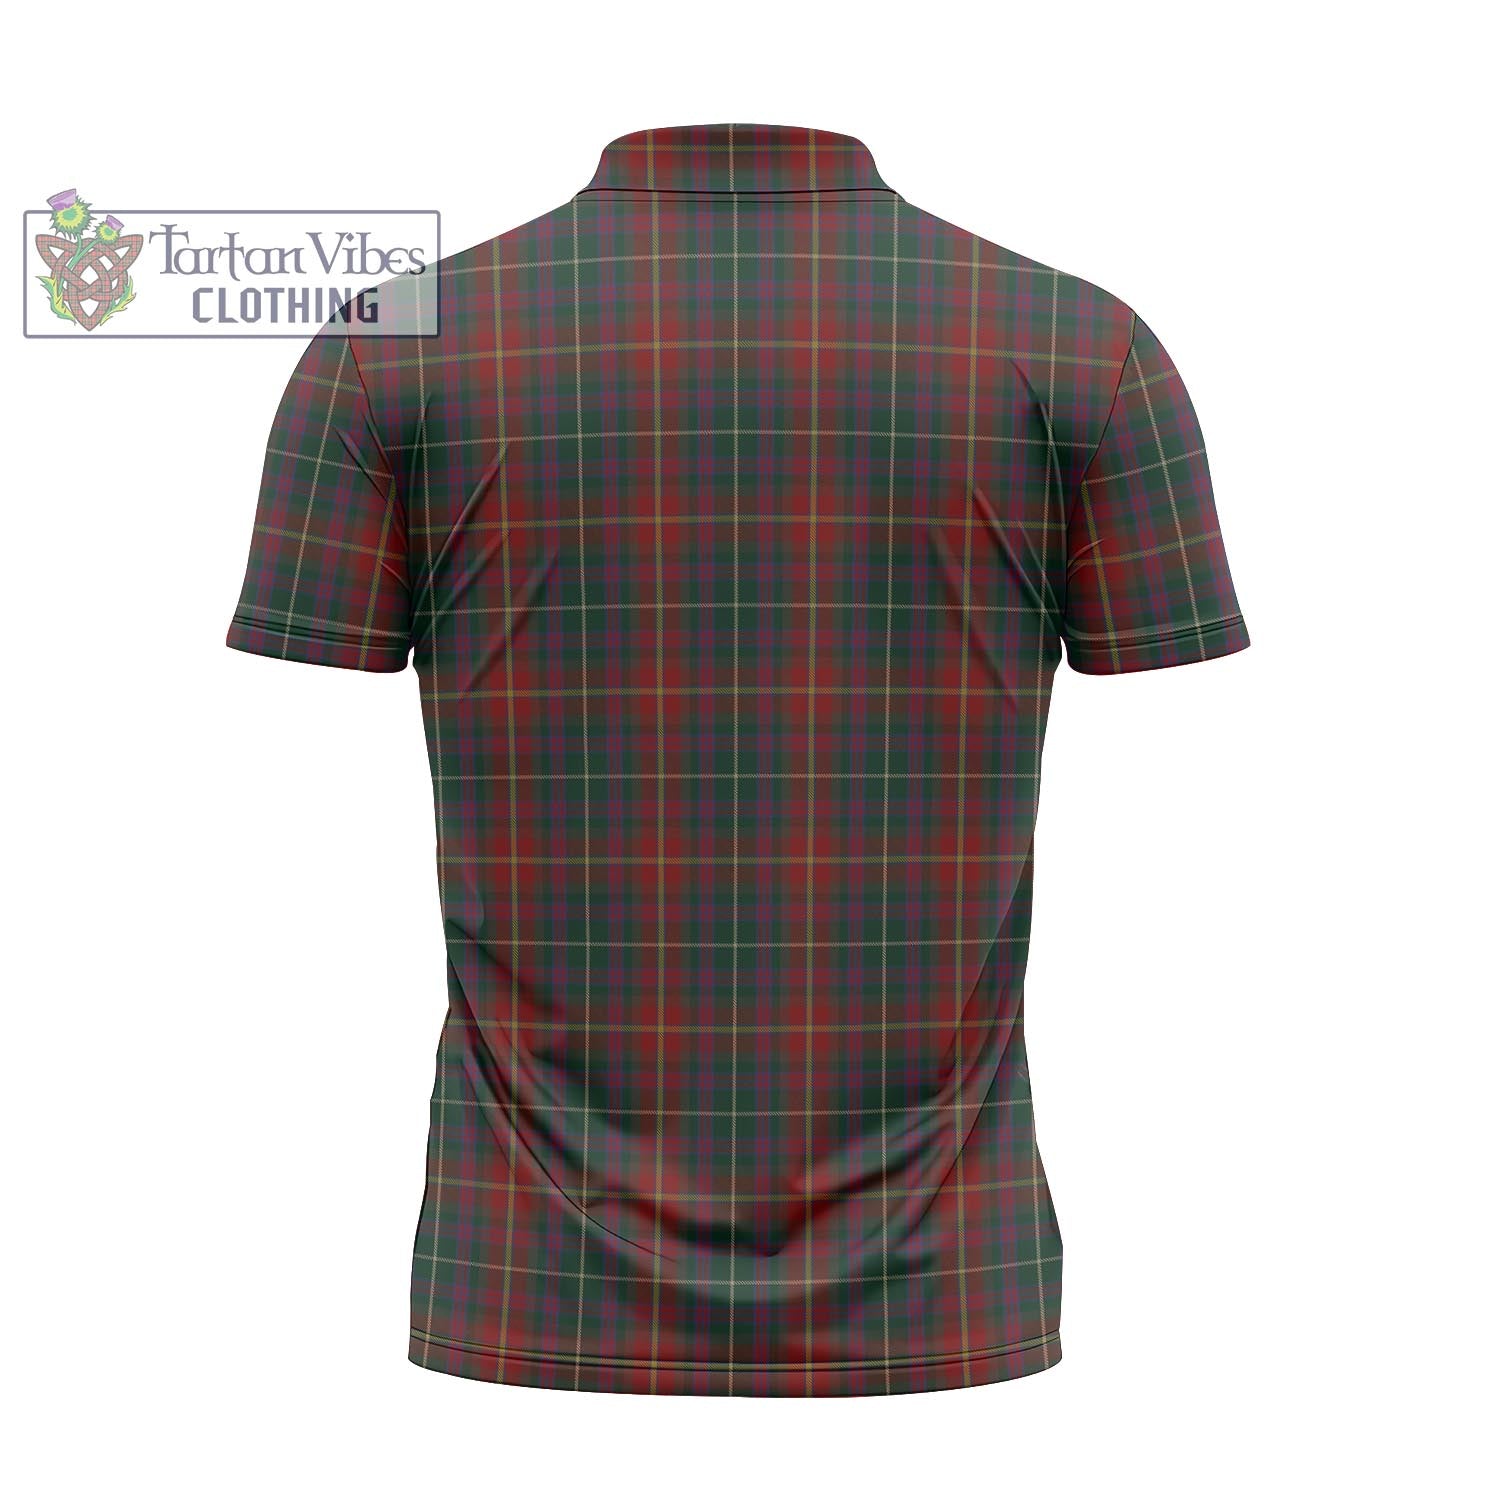 Tartan Vibes Clothing Meath County Ireland Tartan Zipper Polo Shirt